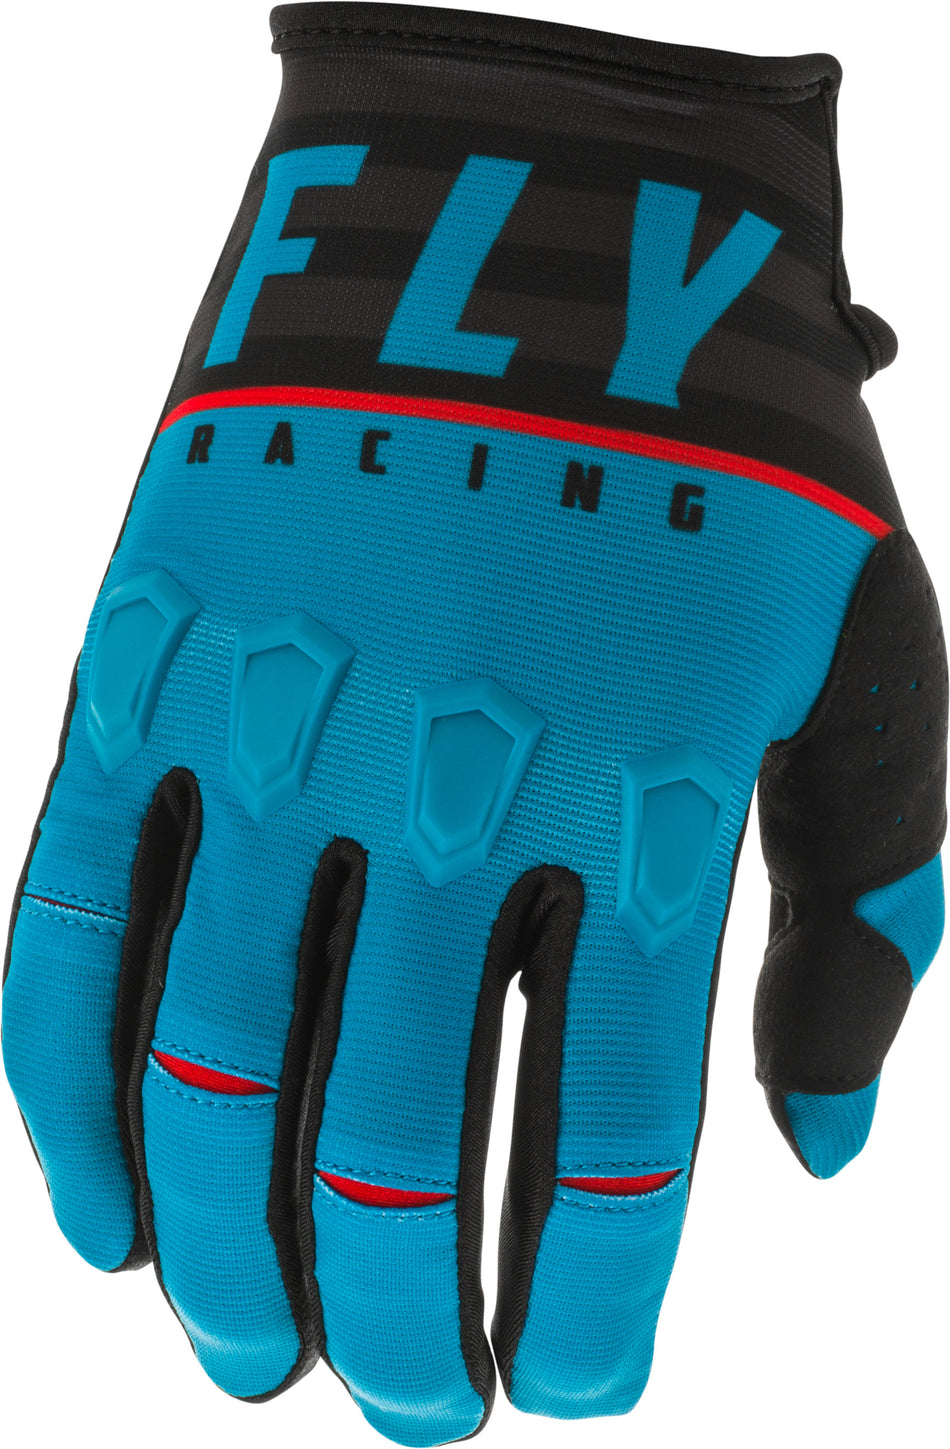 FLY RACING Kinetic K120 Gloves Blue/Black/Red Sz 04 373-41904